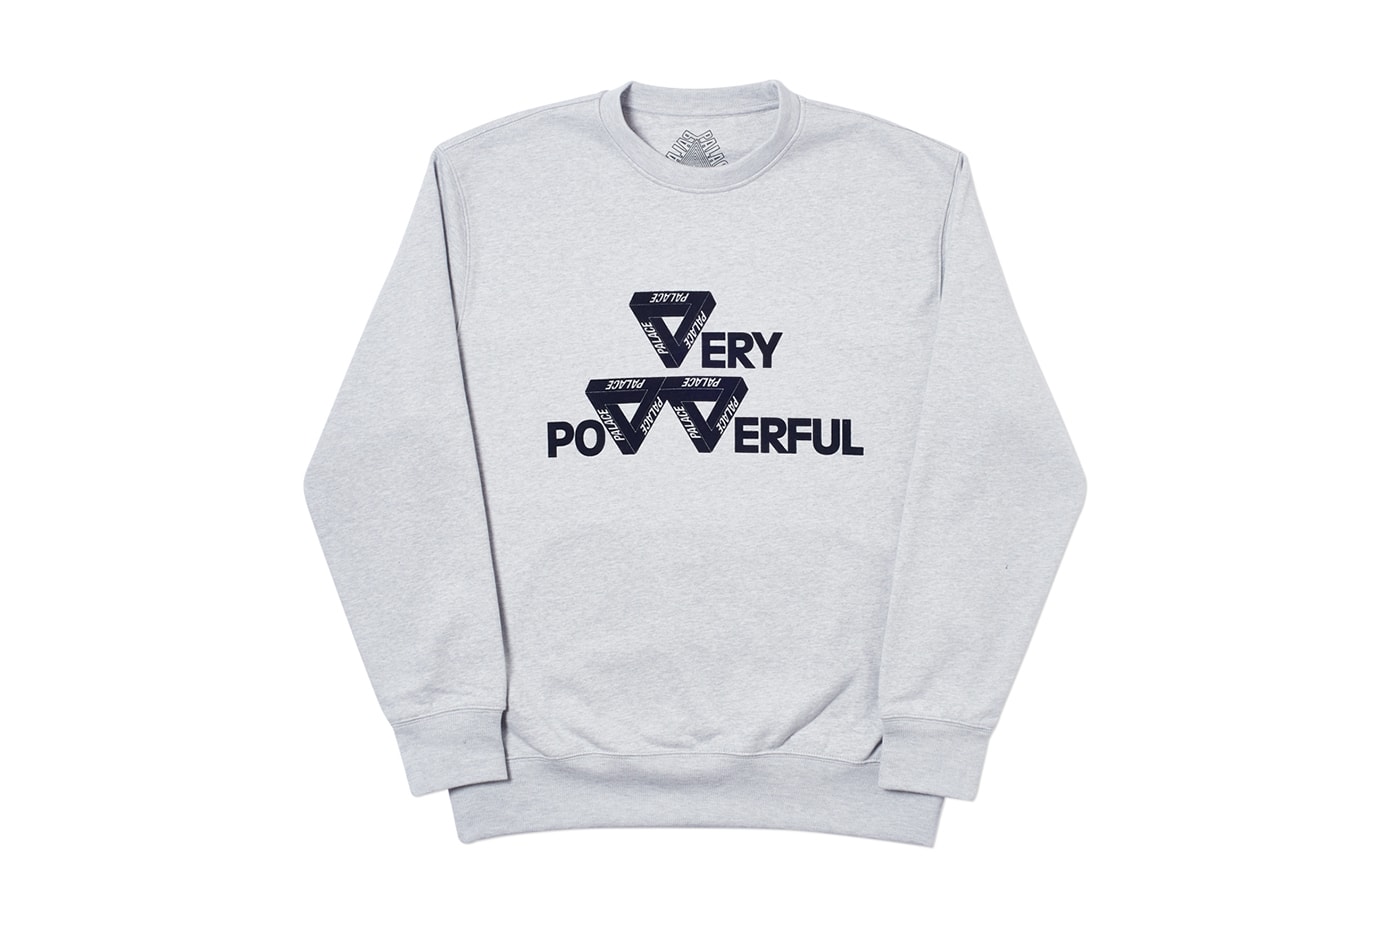 Palace 2019 Summer Sweatshirts hoodies pullover crewnecks triferg logo branding graphic shirt rugby polo